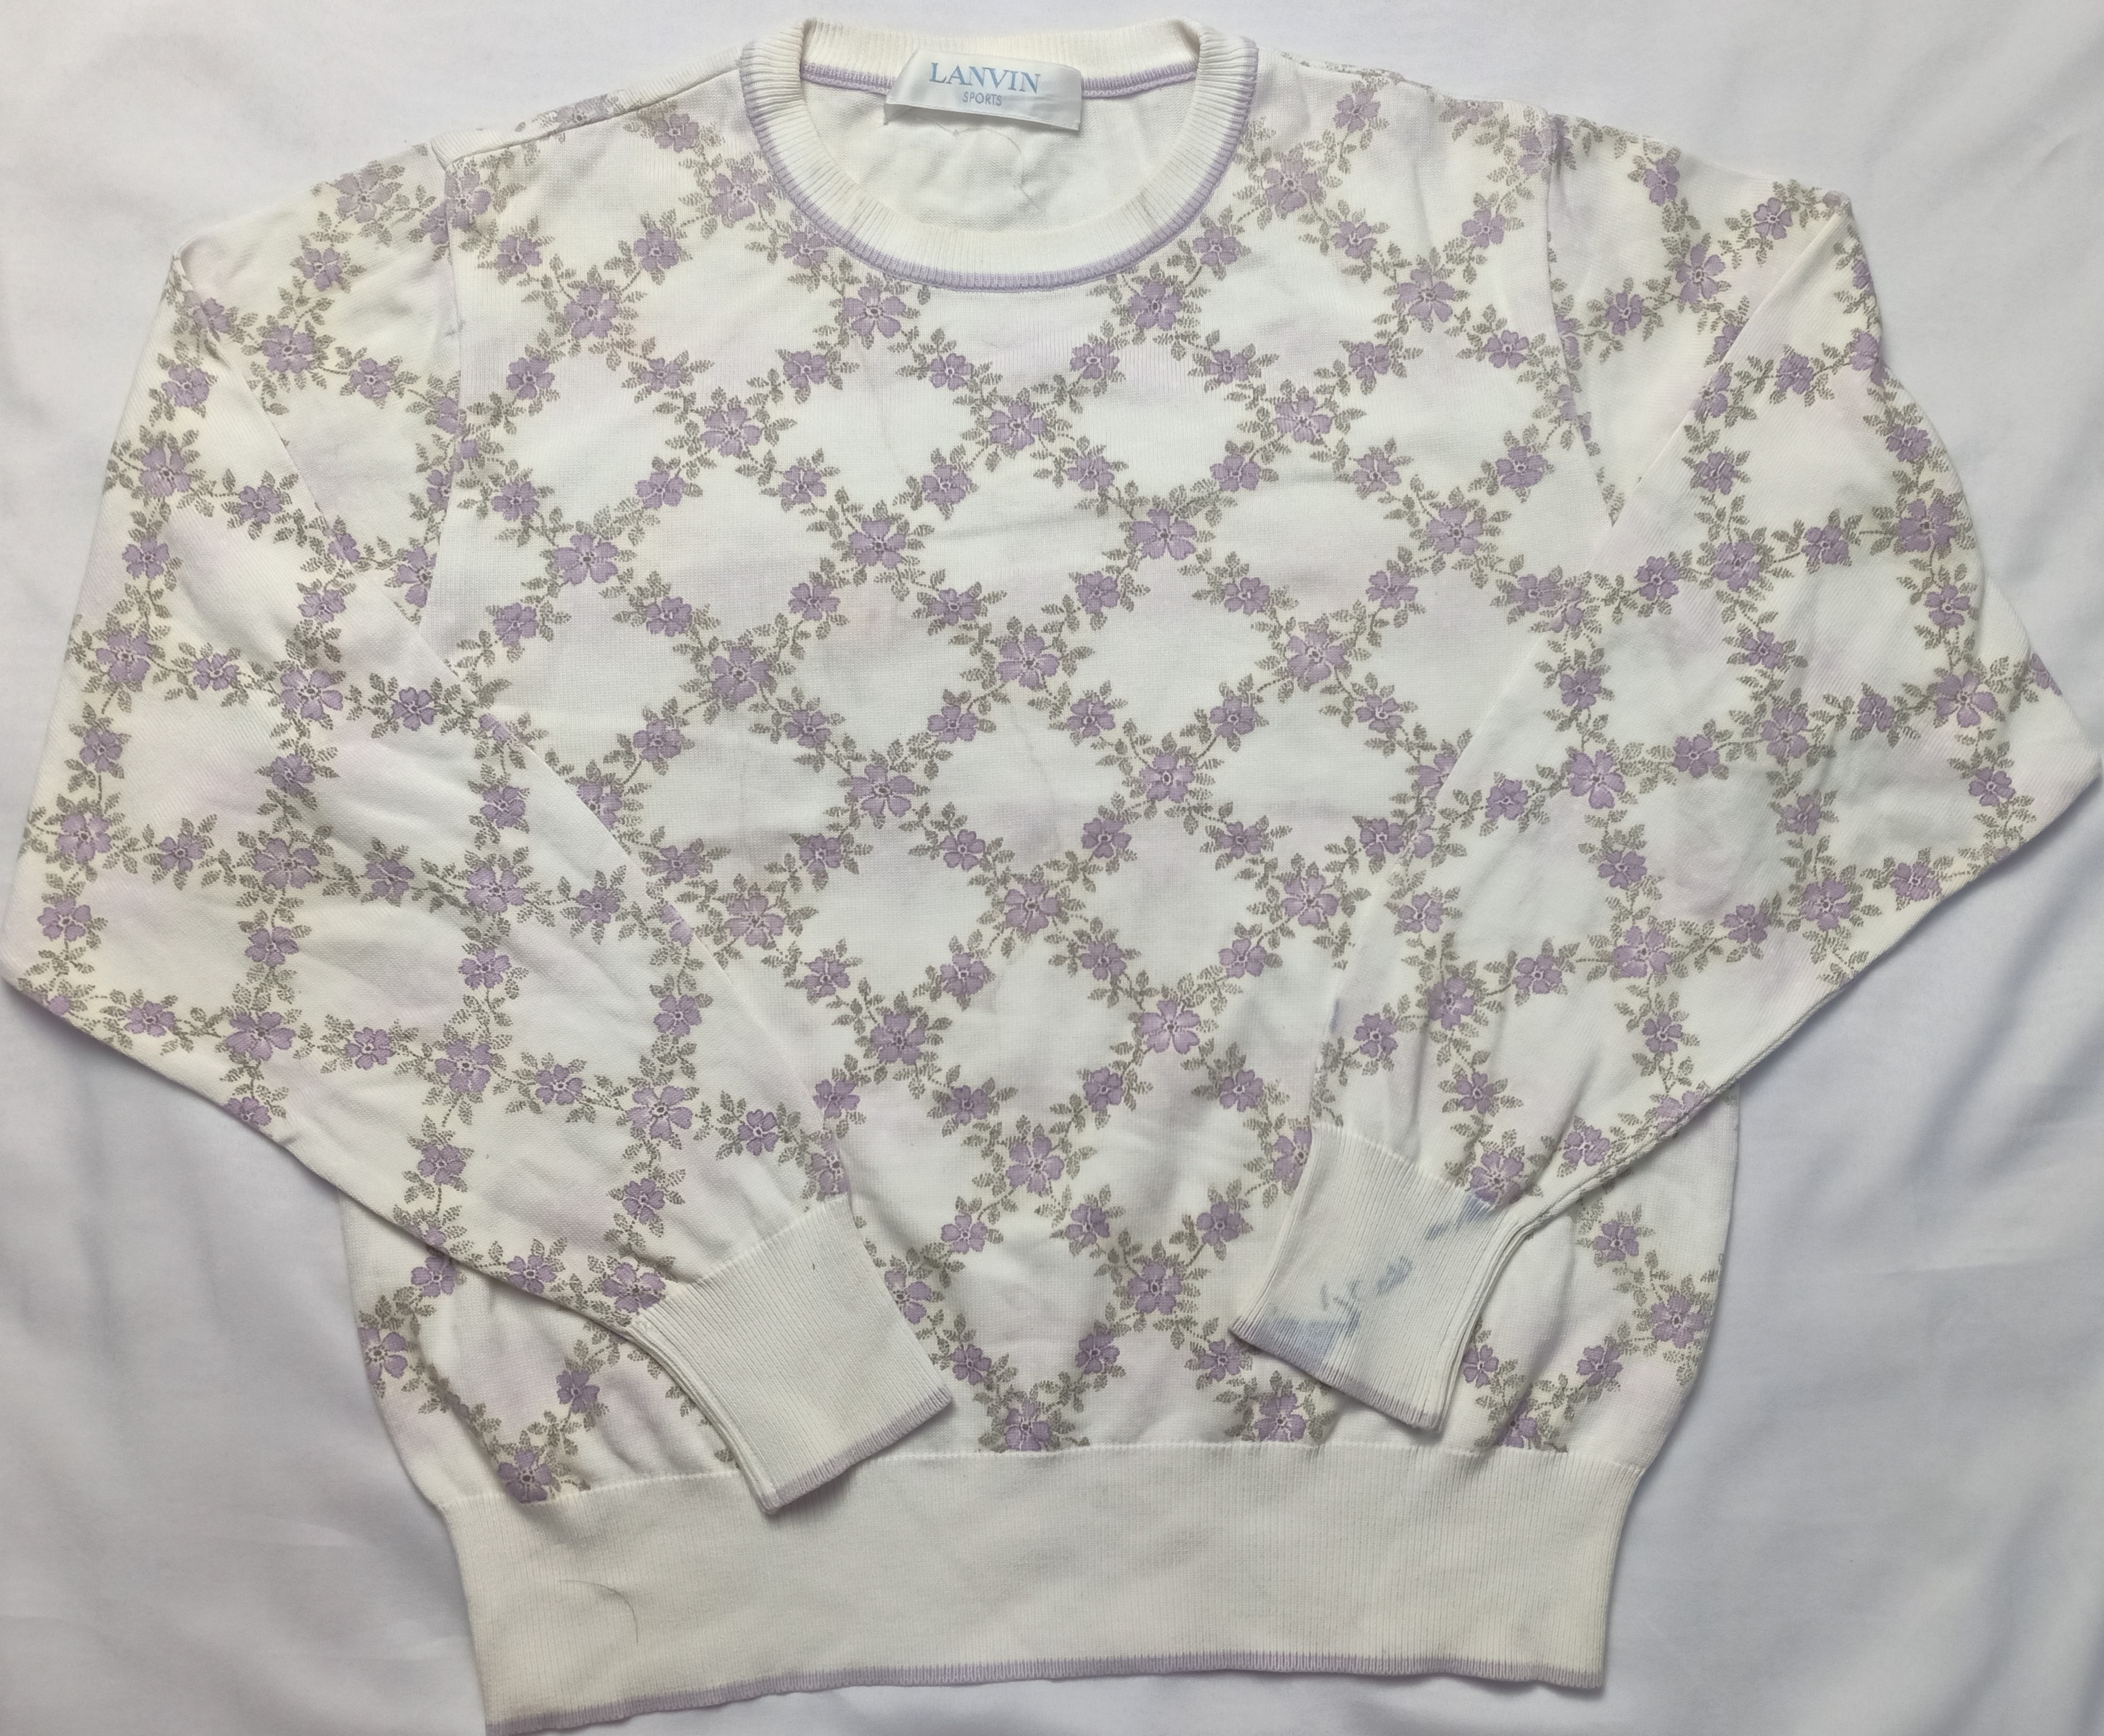 LANVIN Sport Shirt Flower Art Sweatshirt - 2